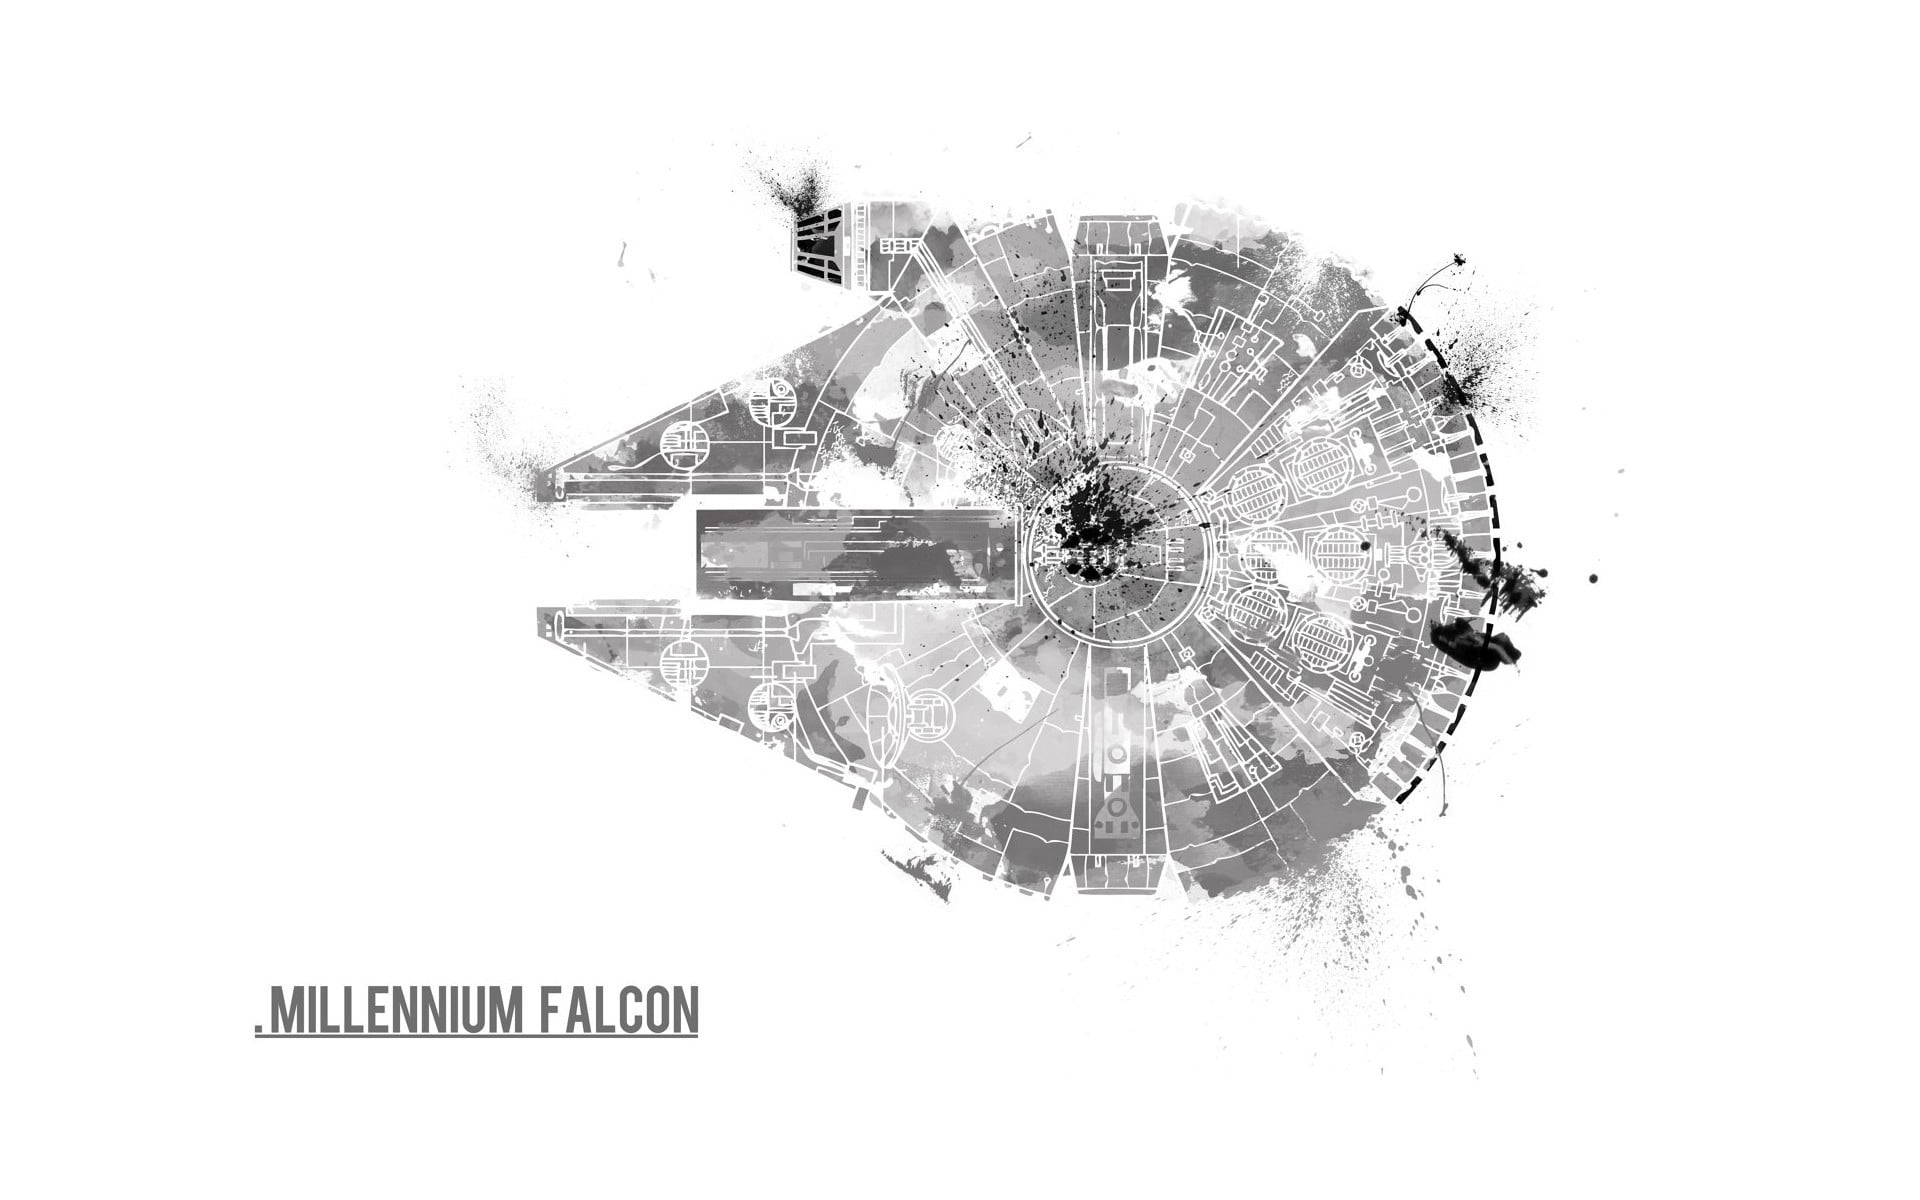 Millennium Falcon wallpaper, fan art, Star Wars, spaceship, artwork